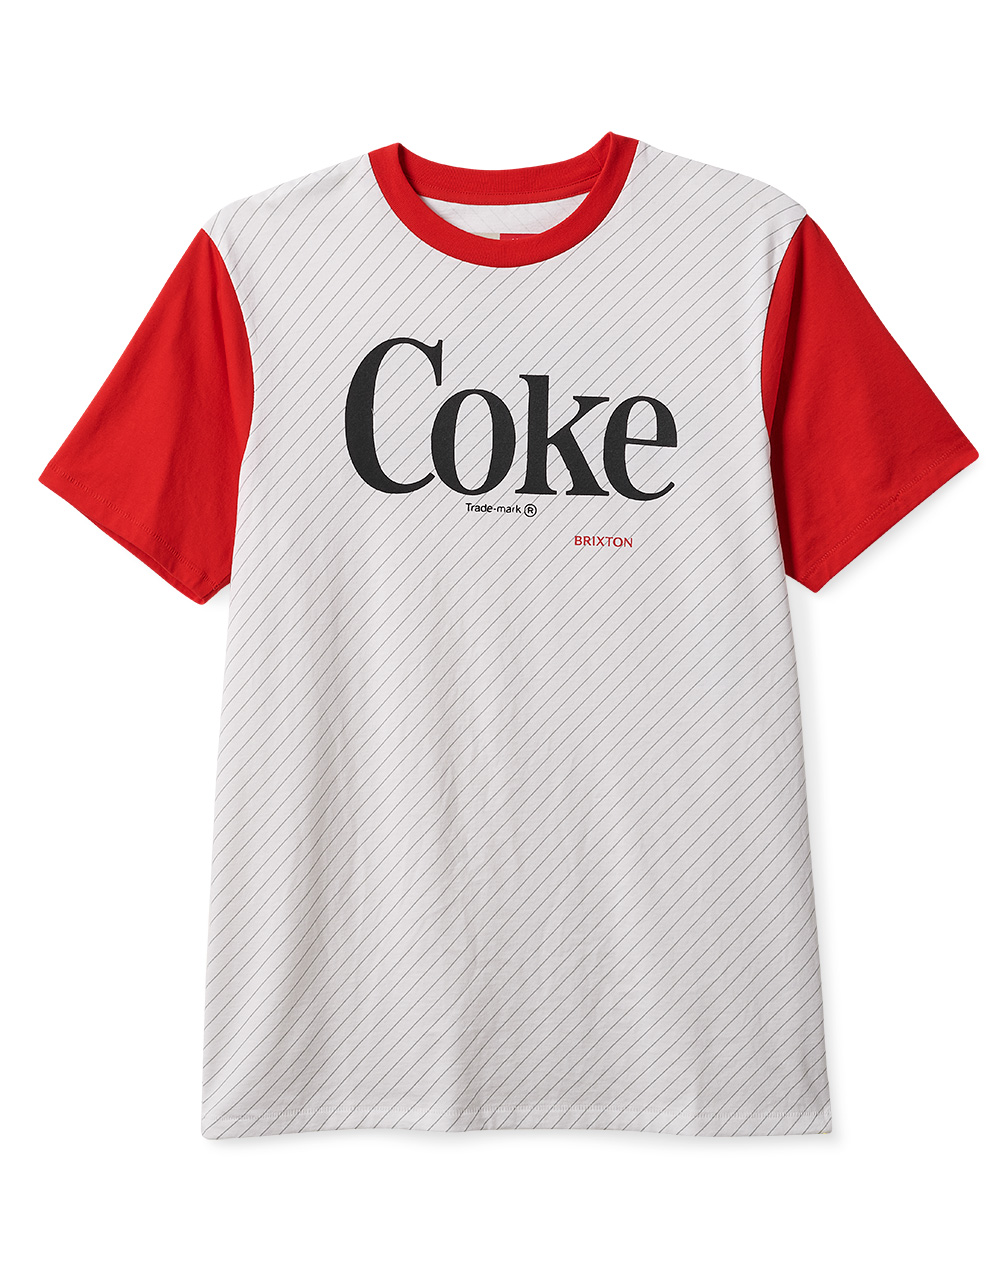 BRIXTON x Coca-Cola Coke Mens Tee - RED/WHITE | Tillys